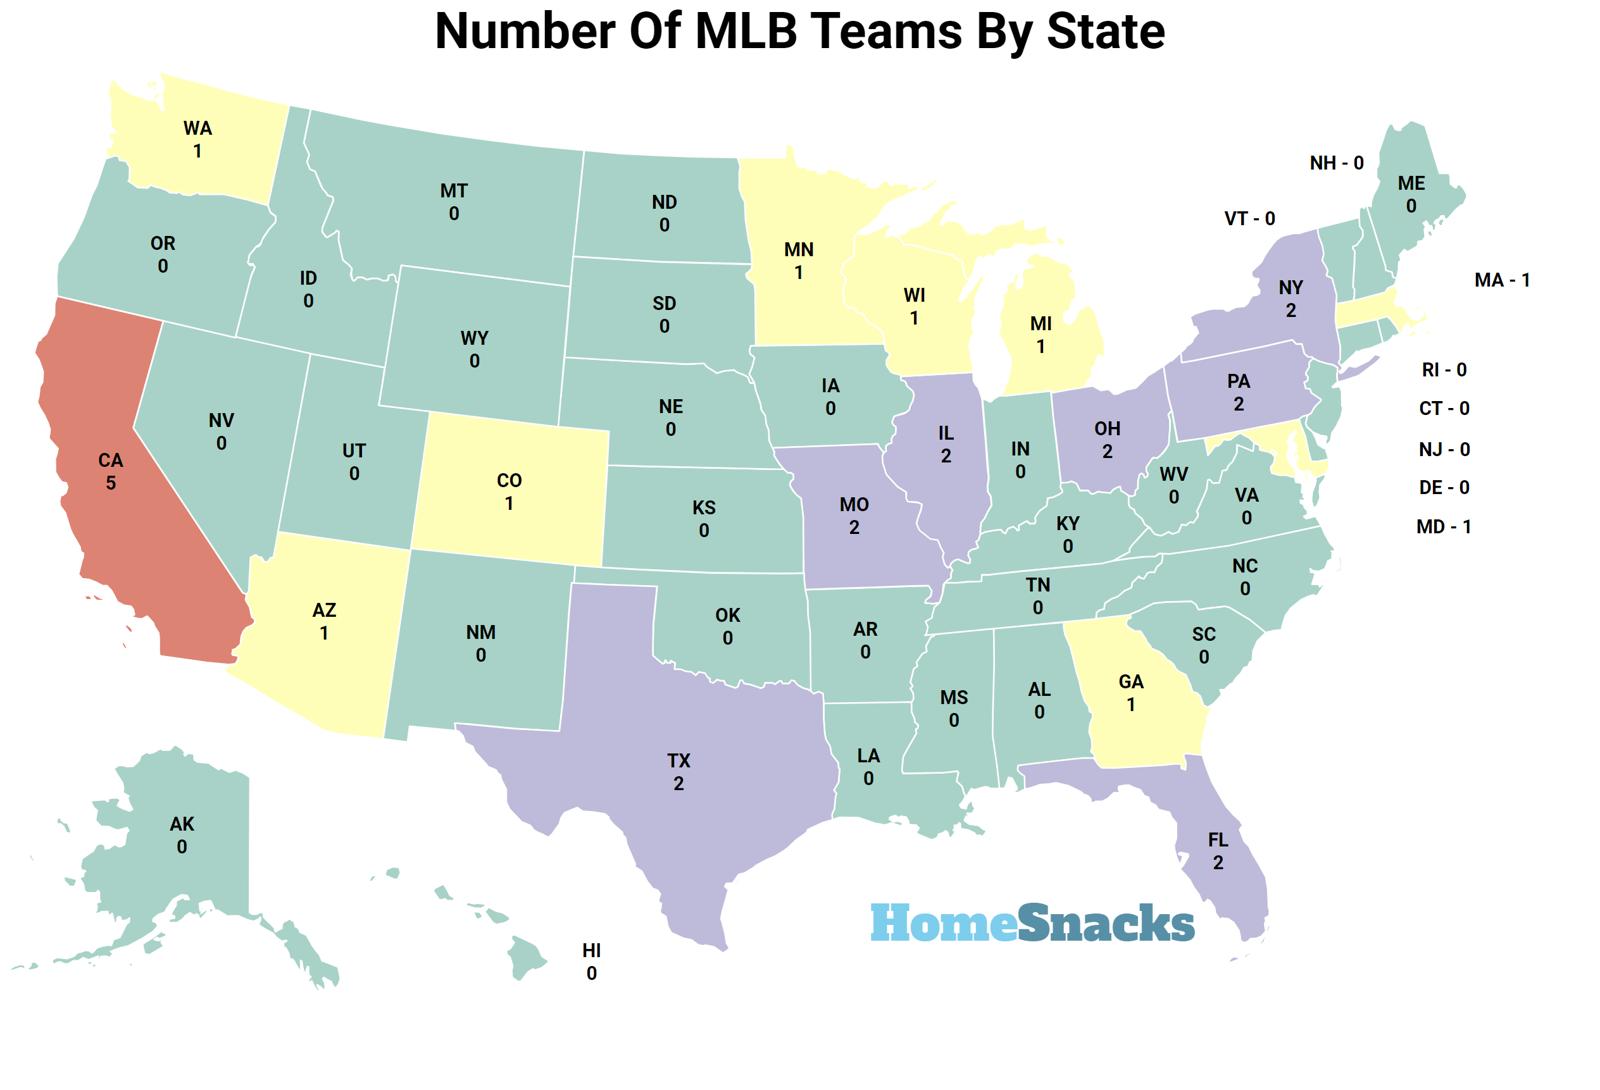 Number Of MLB Teams By State